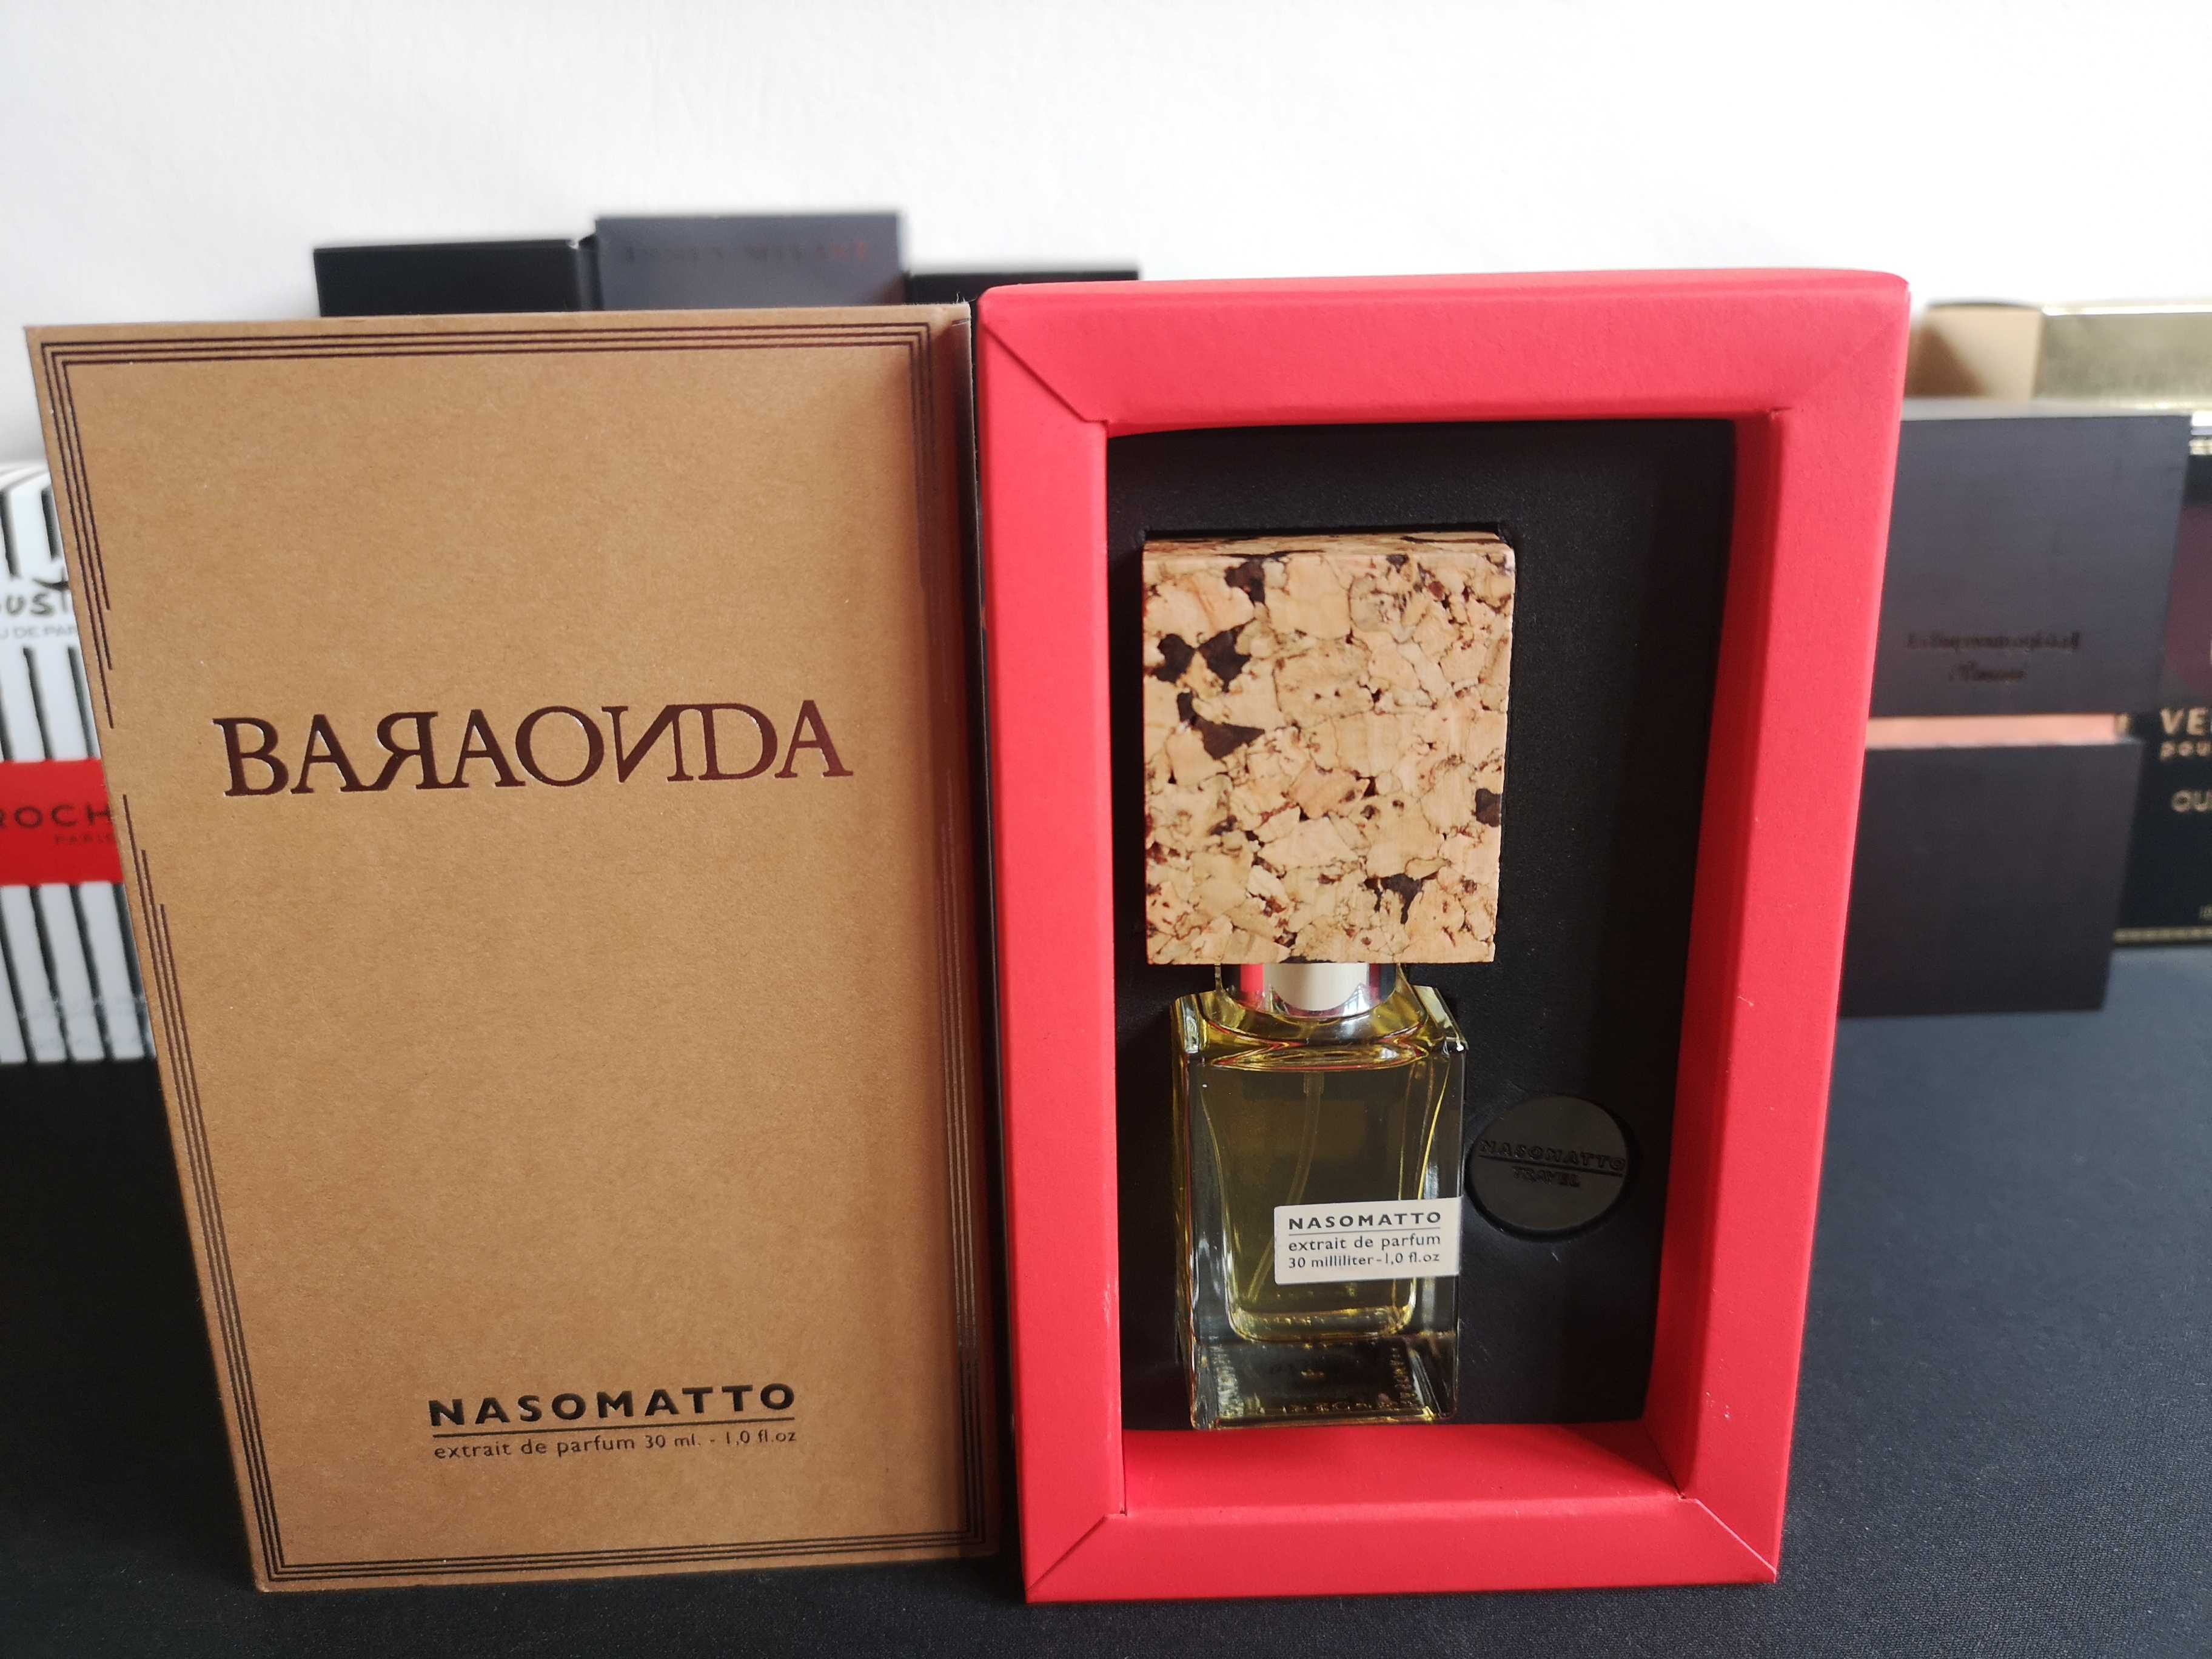 Nasomatto Baraonda Extrait de Parfum 30 ml.